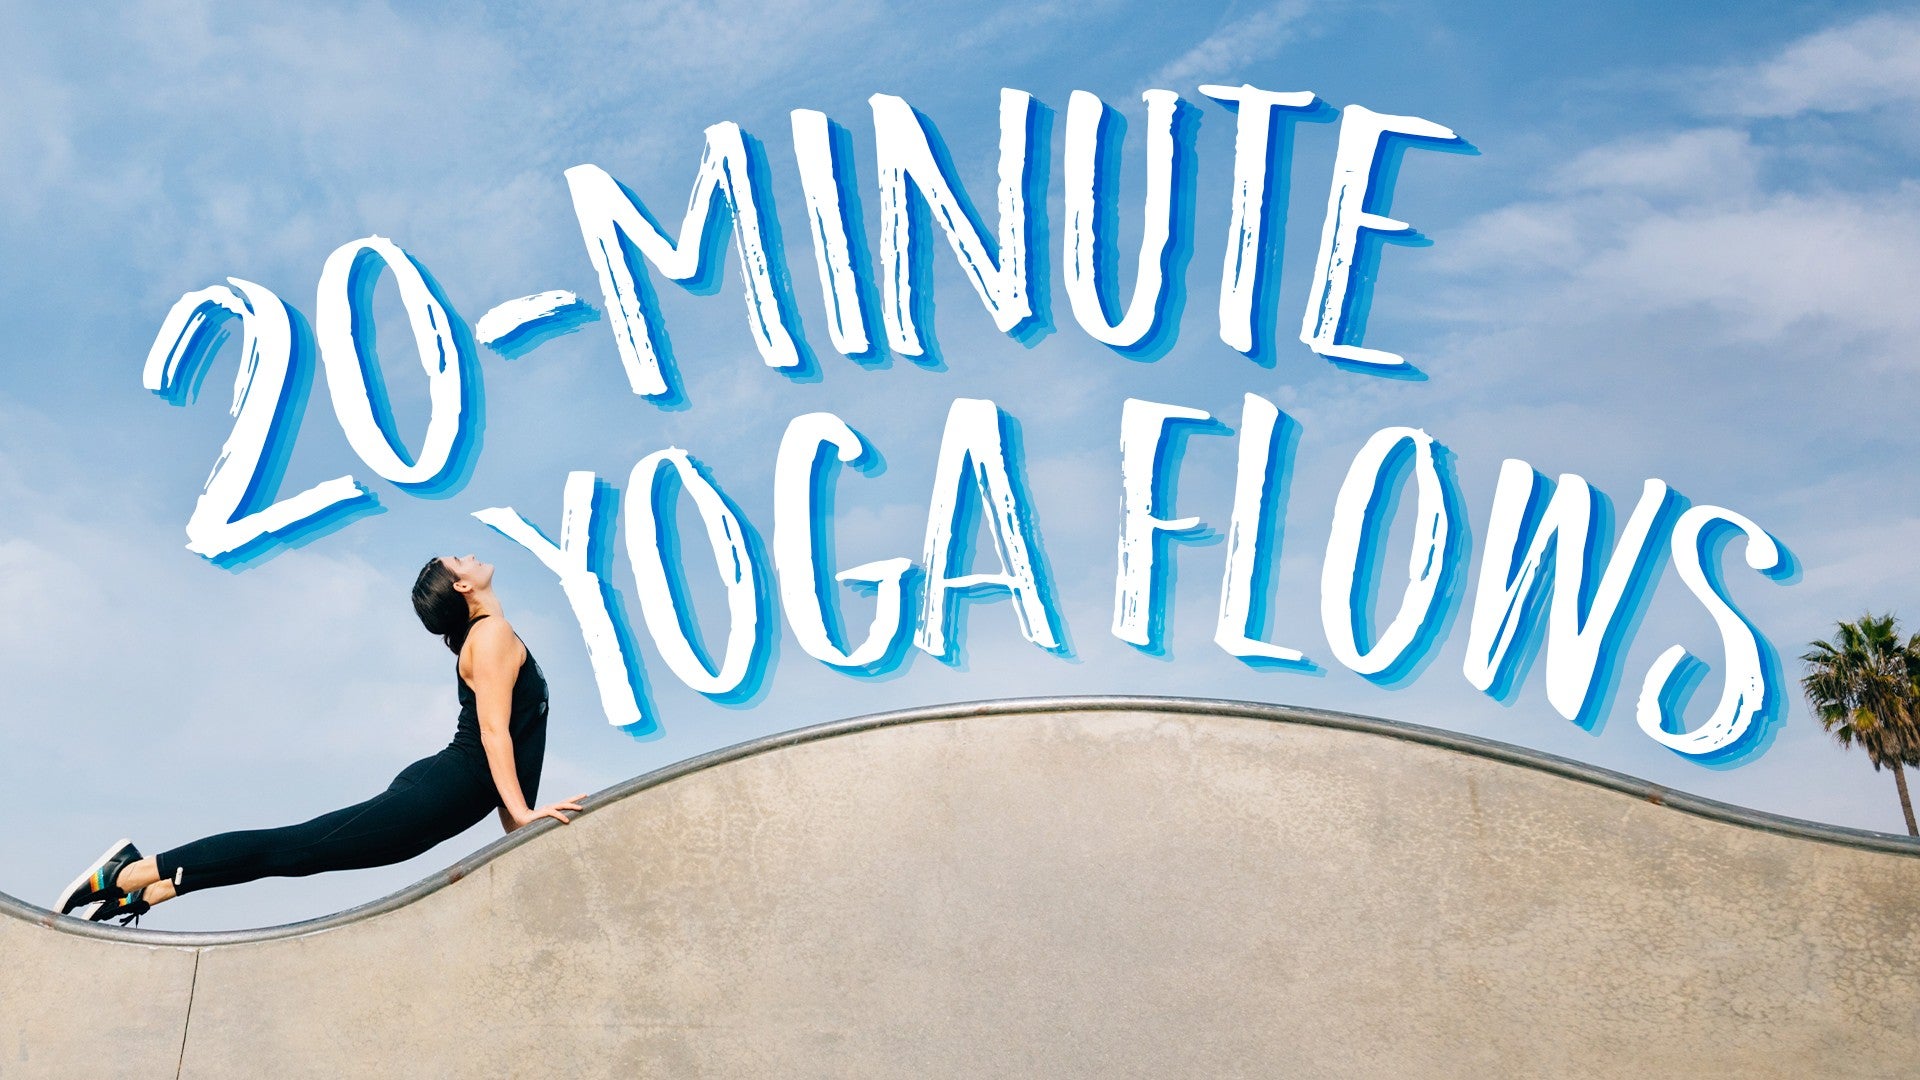 20-Minute Yoga Flows Artwork